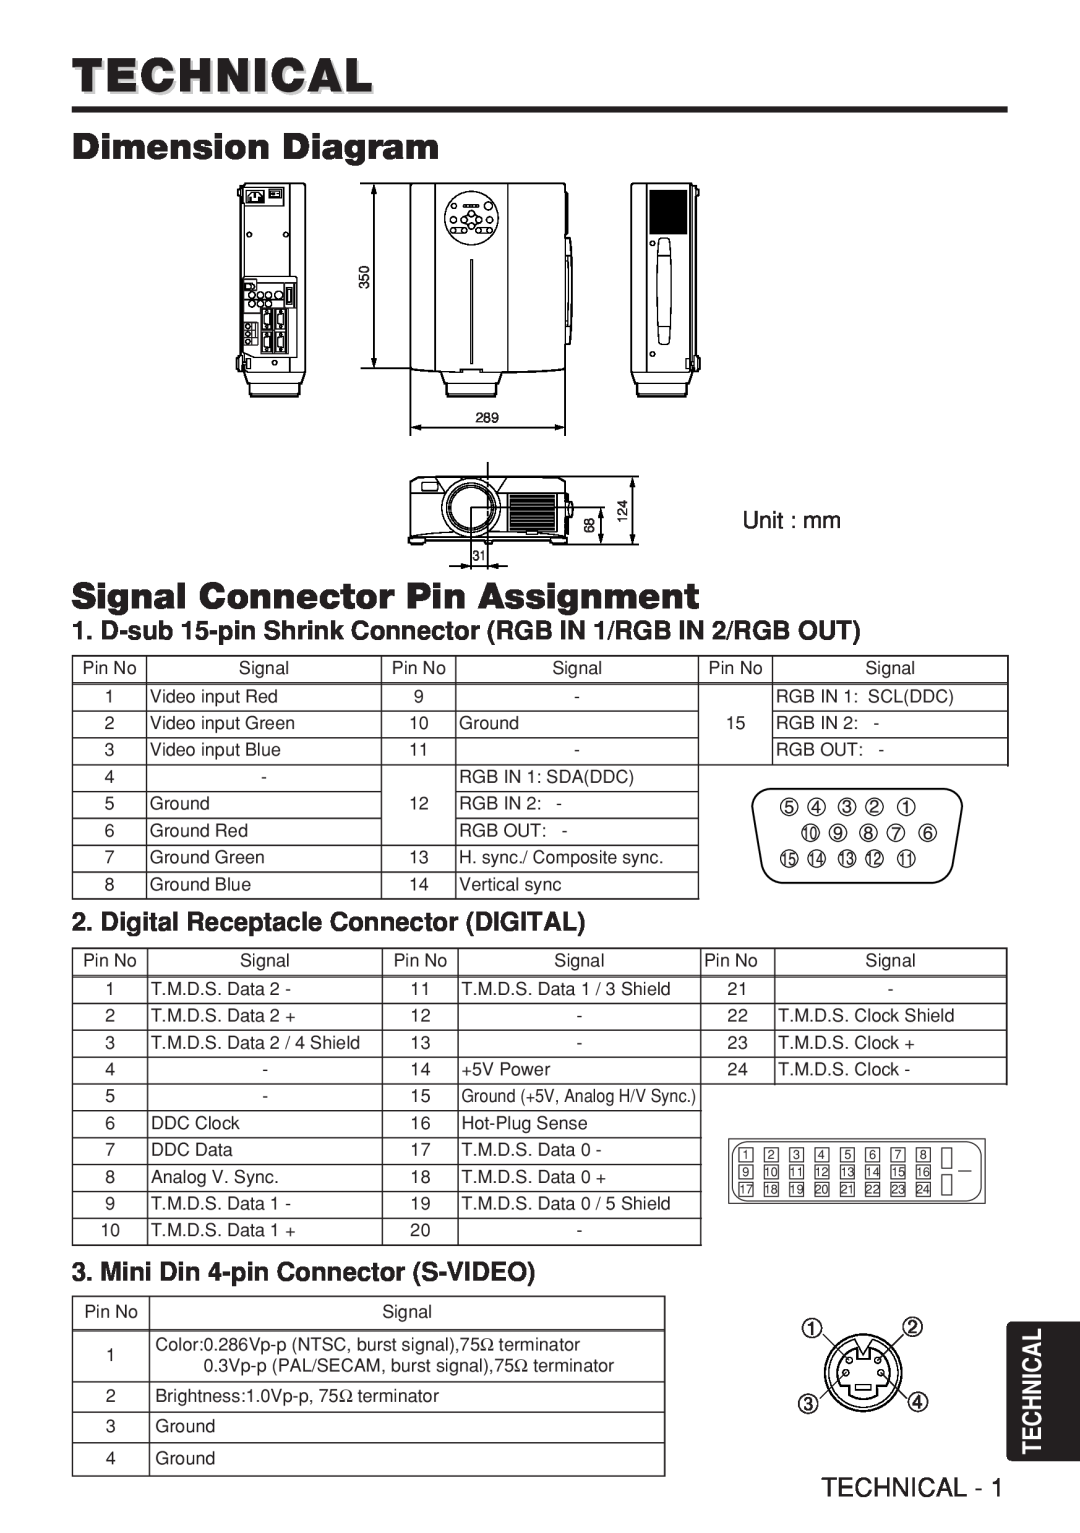 Hitachi CP-X980W Technical, Dimension Diagram, Signal Connector Pin Assignment, Digital Receptacle Connector DIGITAL 